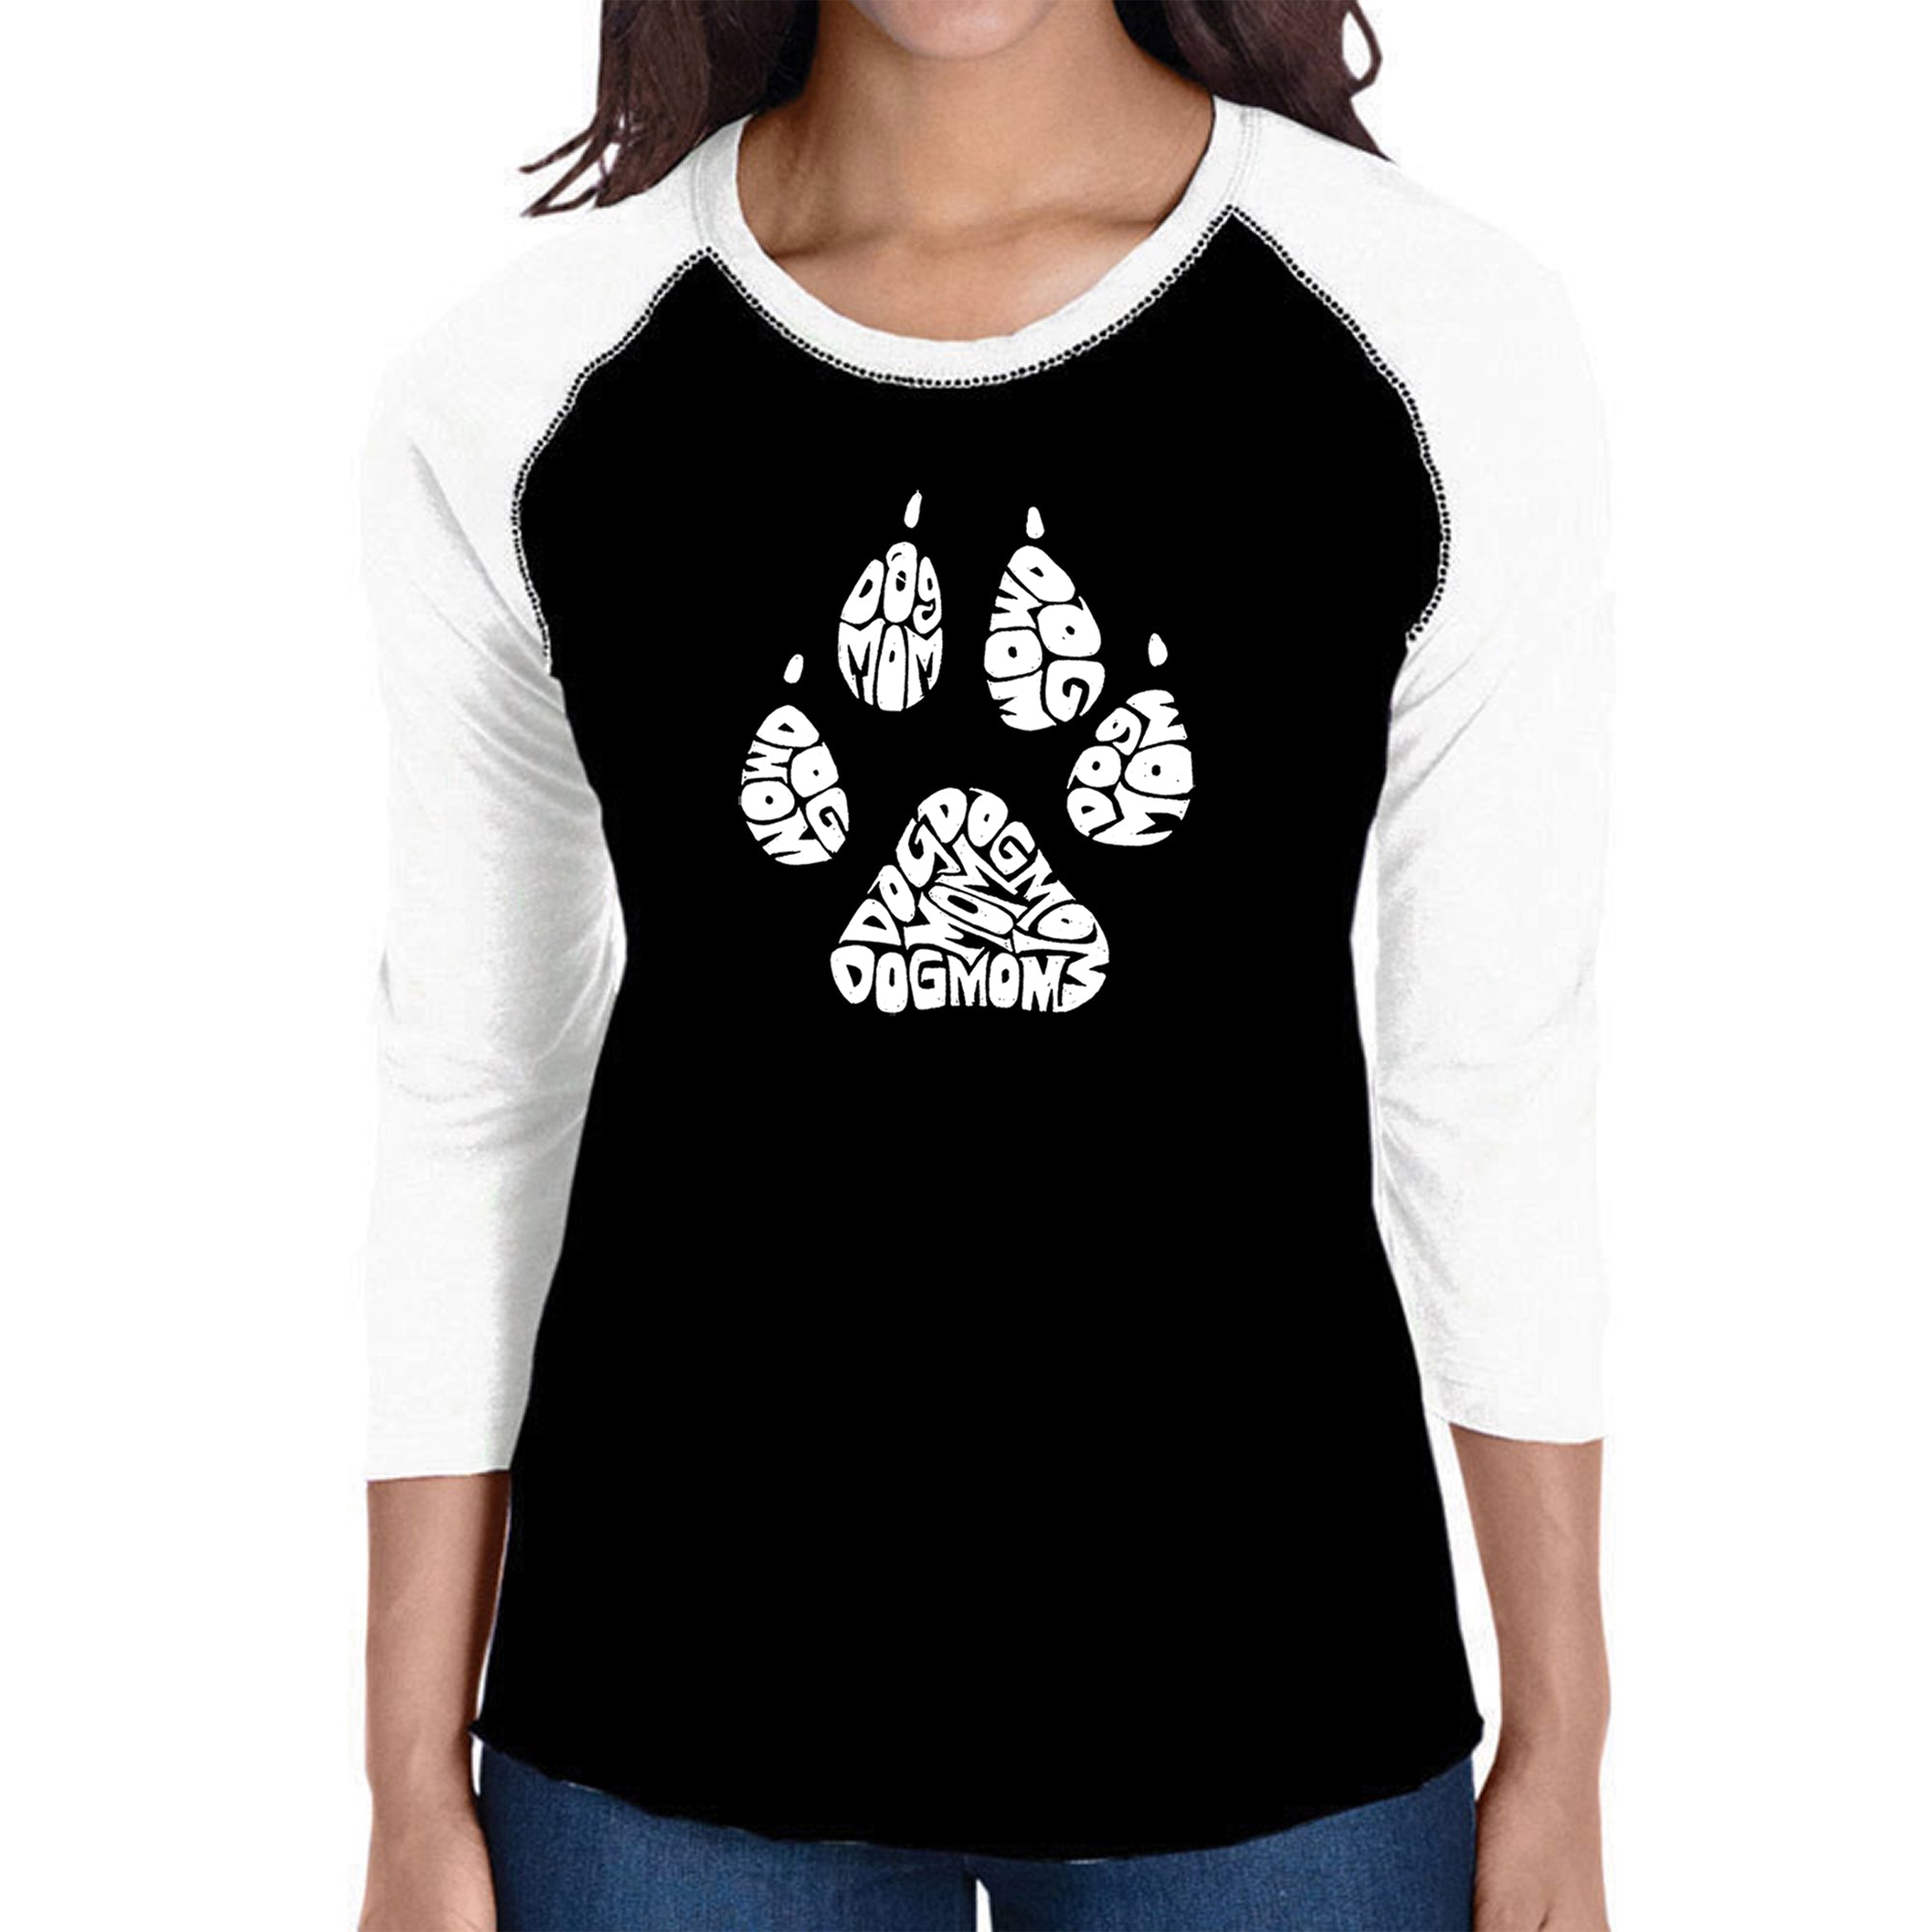 Dog Mom - Women's Raglan Baseball Word Art T-Shirt - Black/White - X-Large